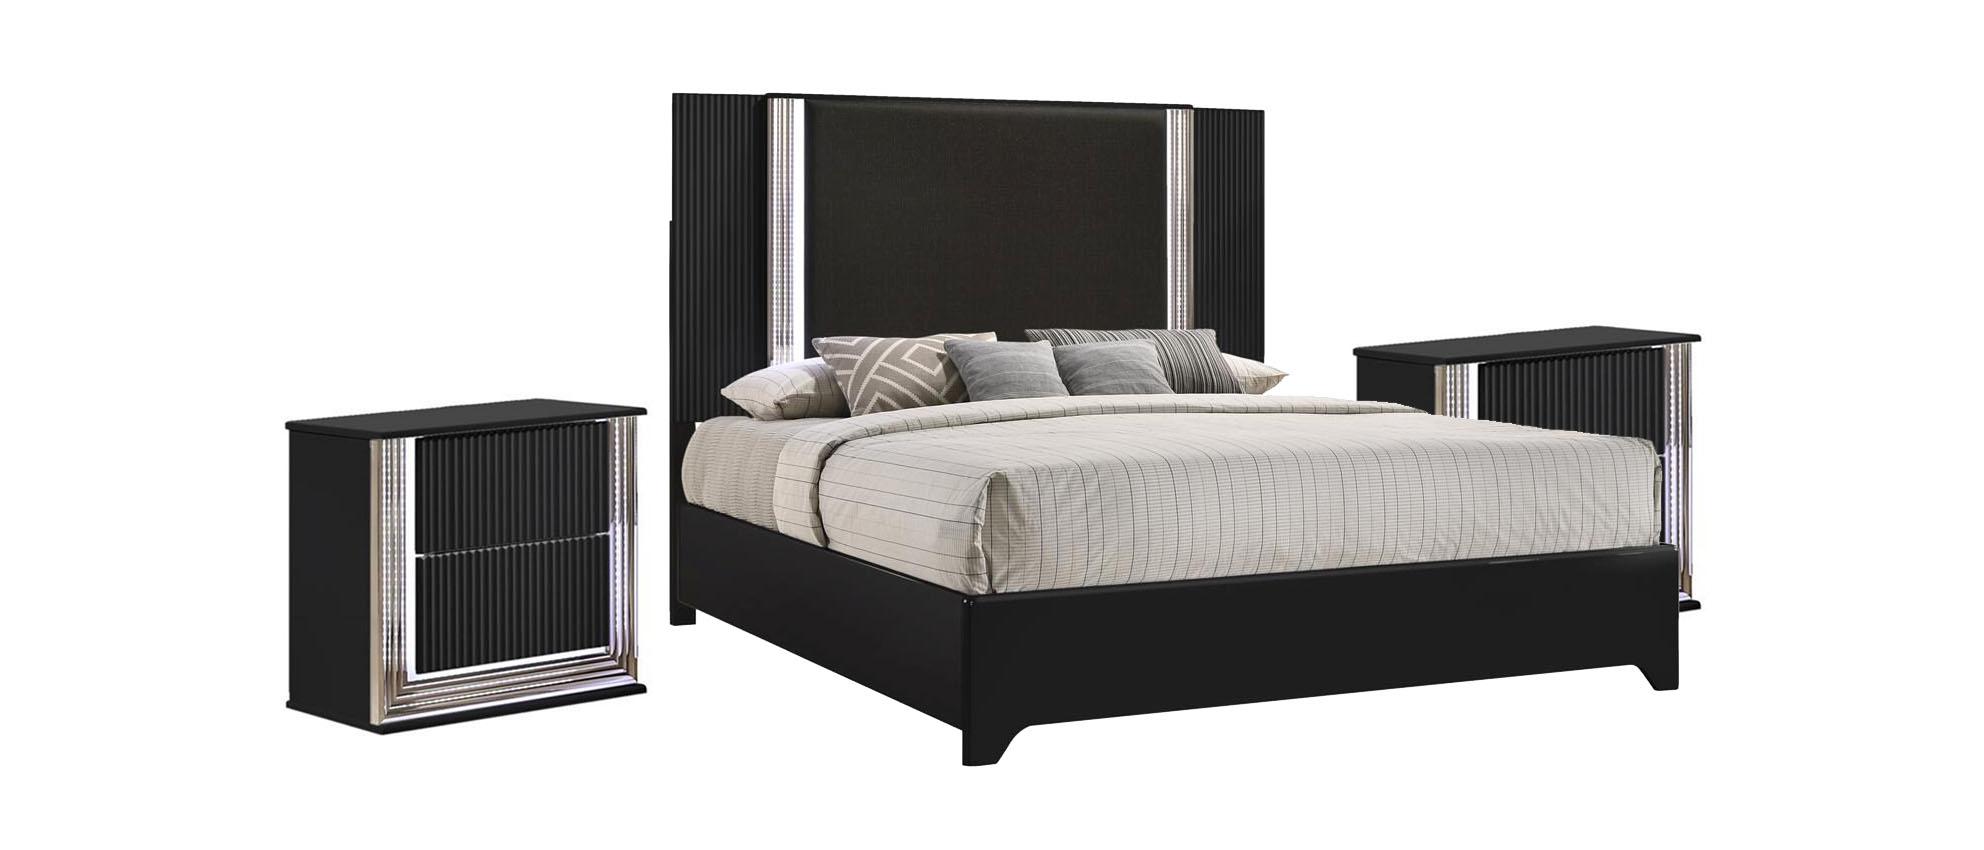 Modern Platform Bedroom Set ASPEN ASPEN-BLACK-QB-Set-3 in Black Faux Leather